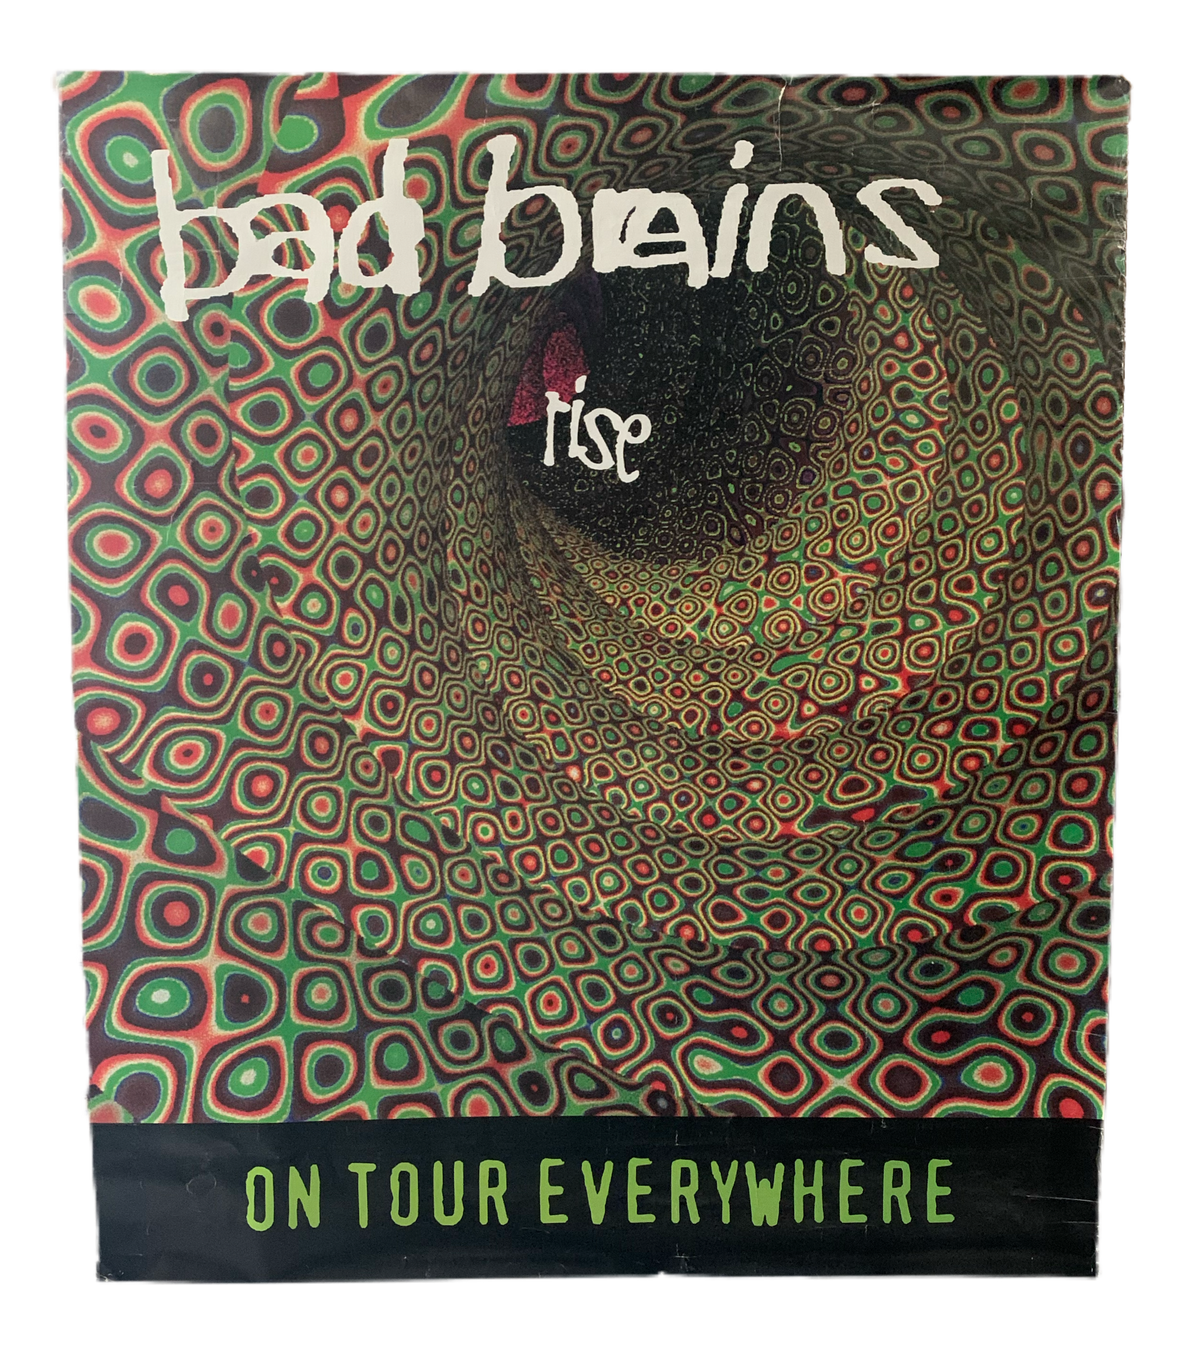 Bad Brains Rise original vintage tour poster